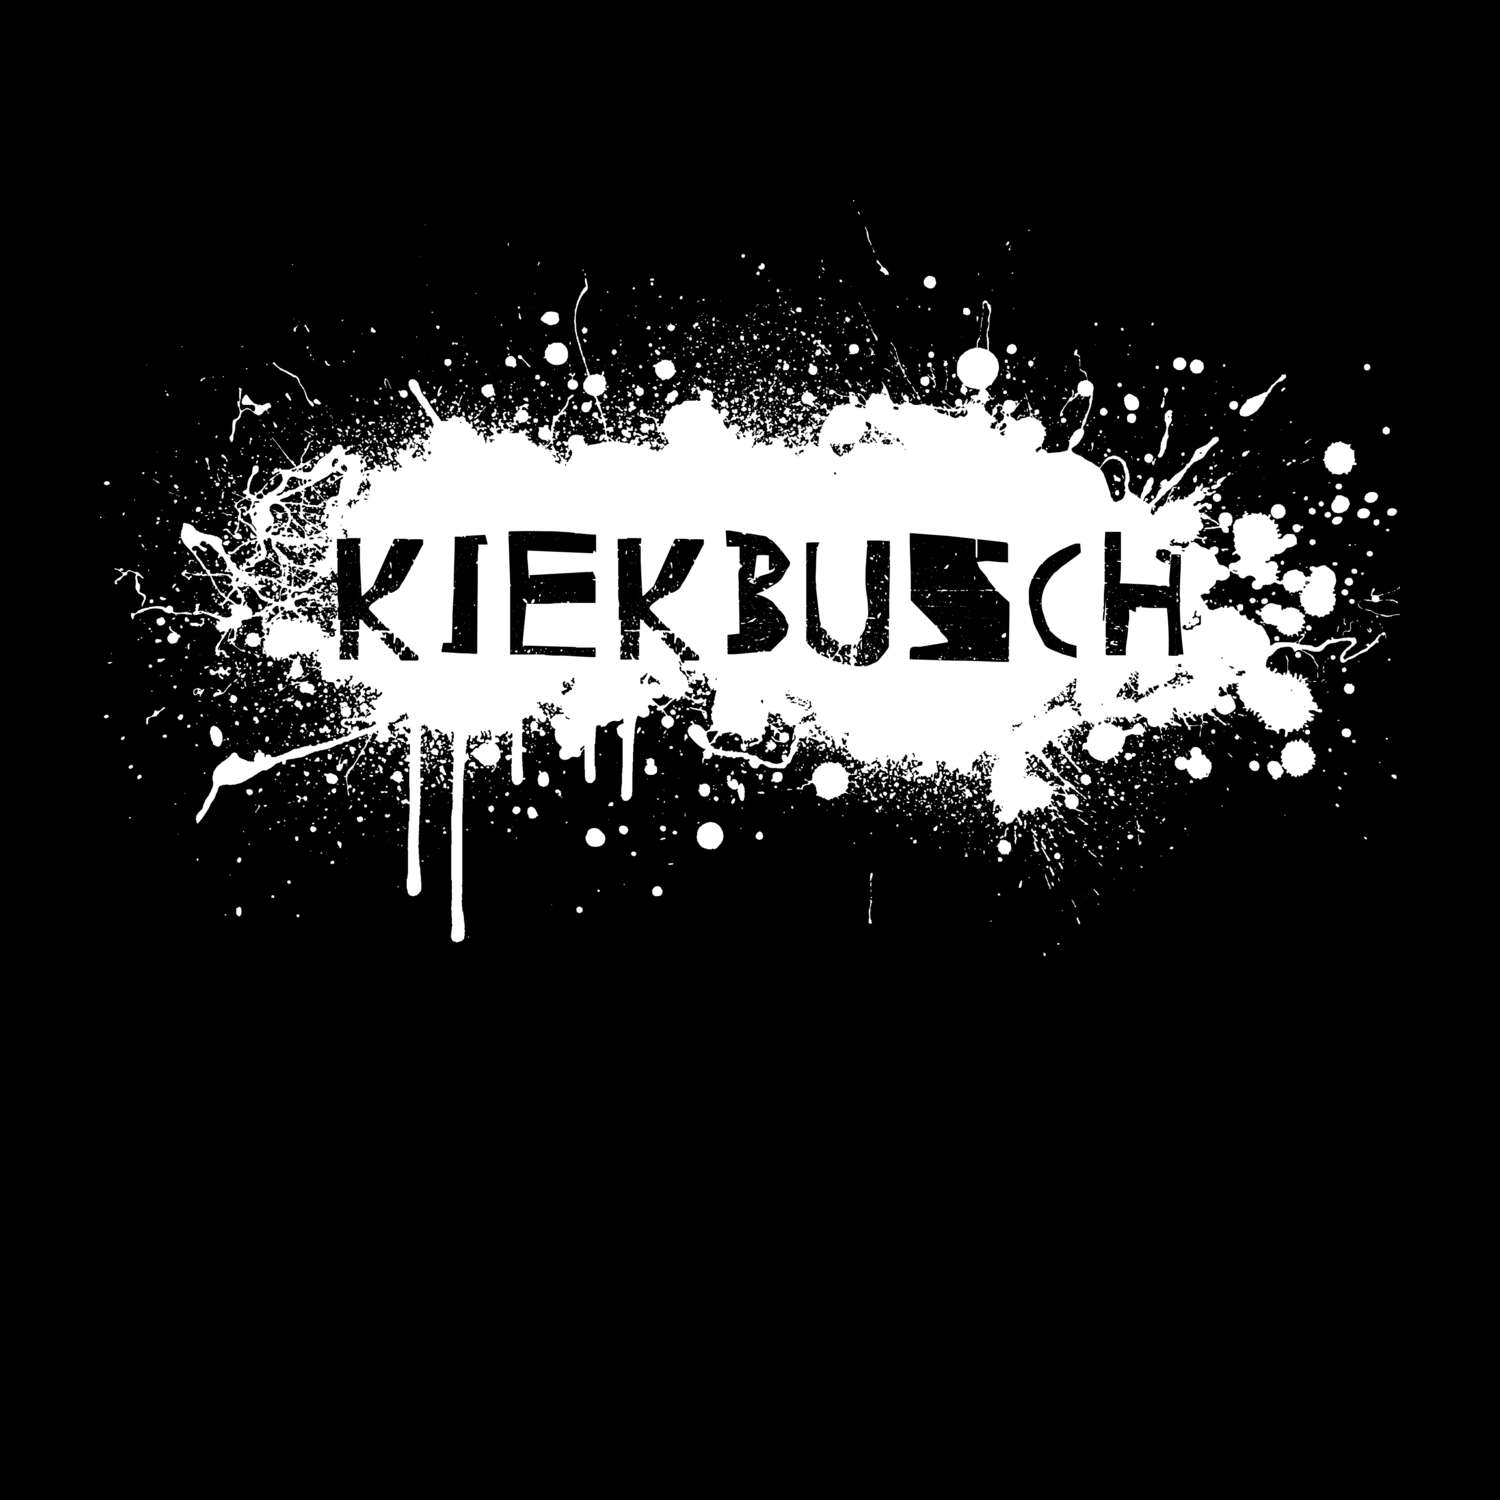 Kiekbusch T-Shirt »Paint Splash Punk«